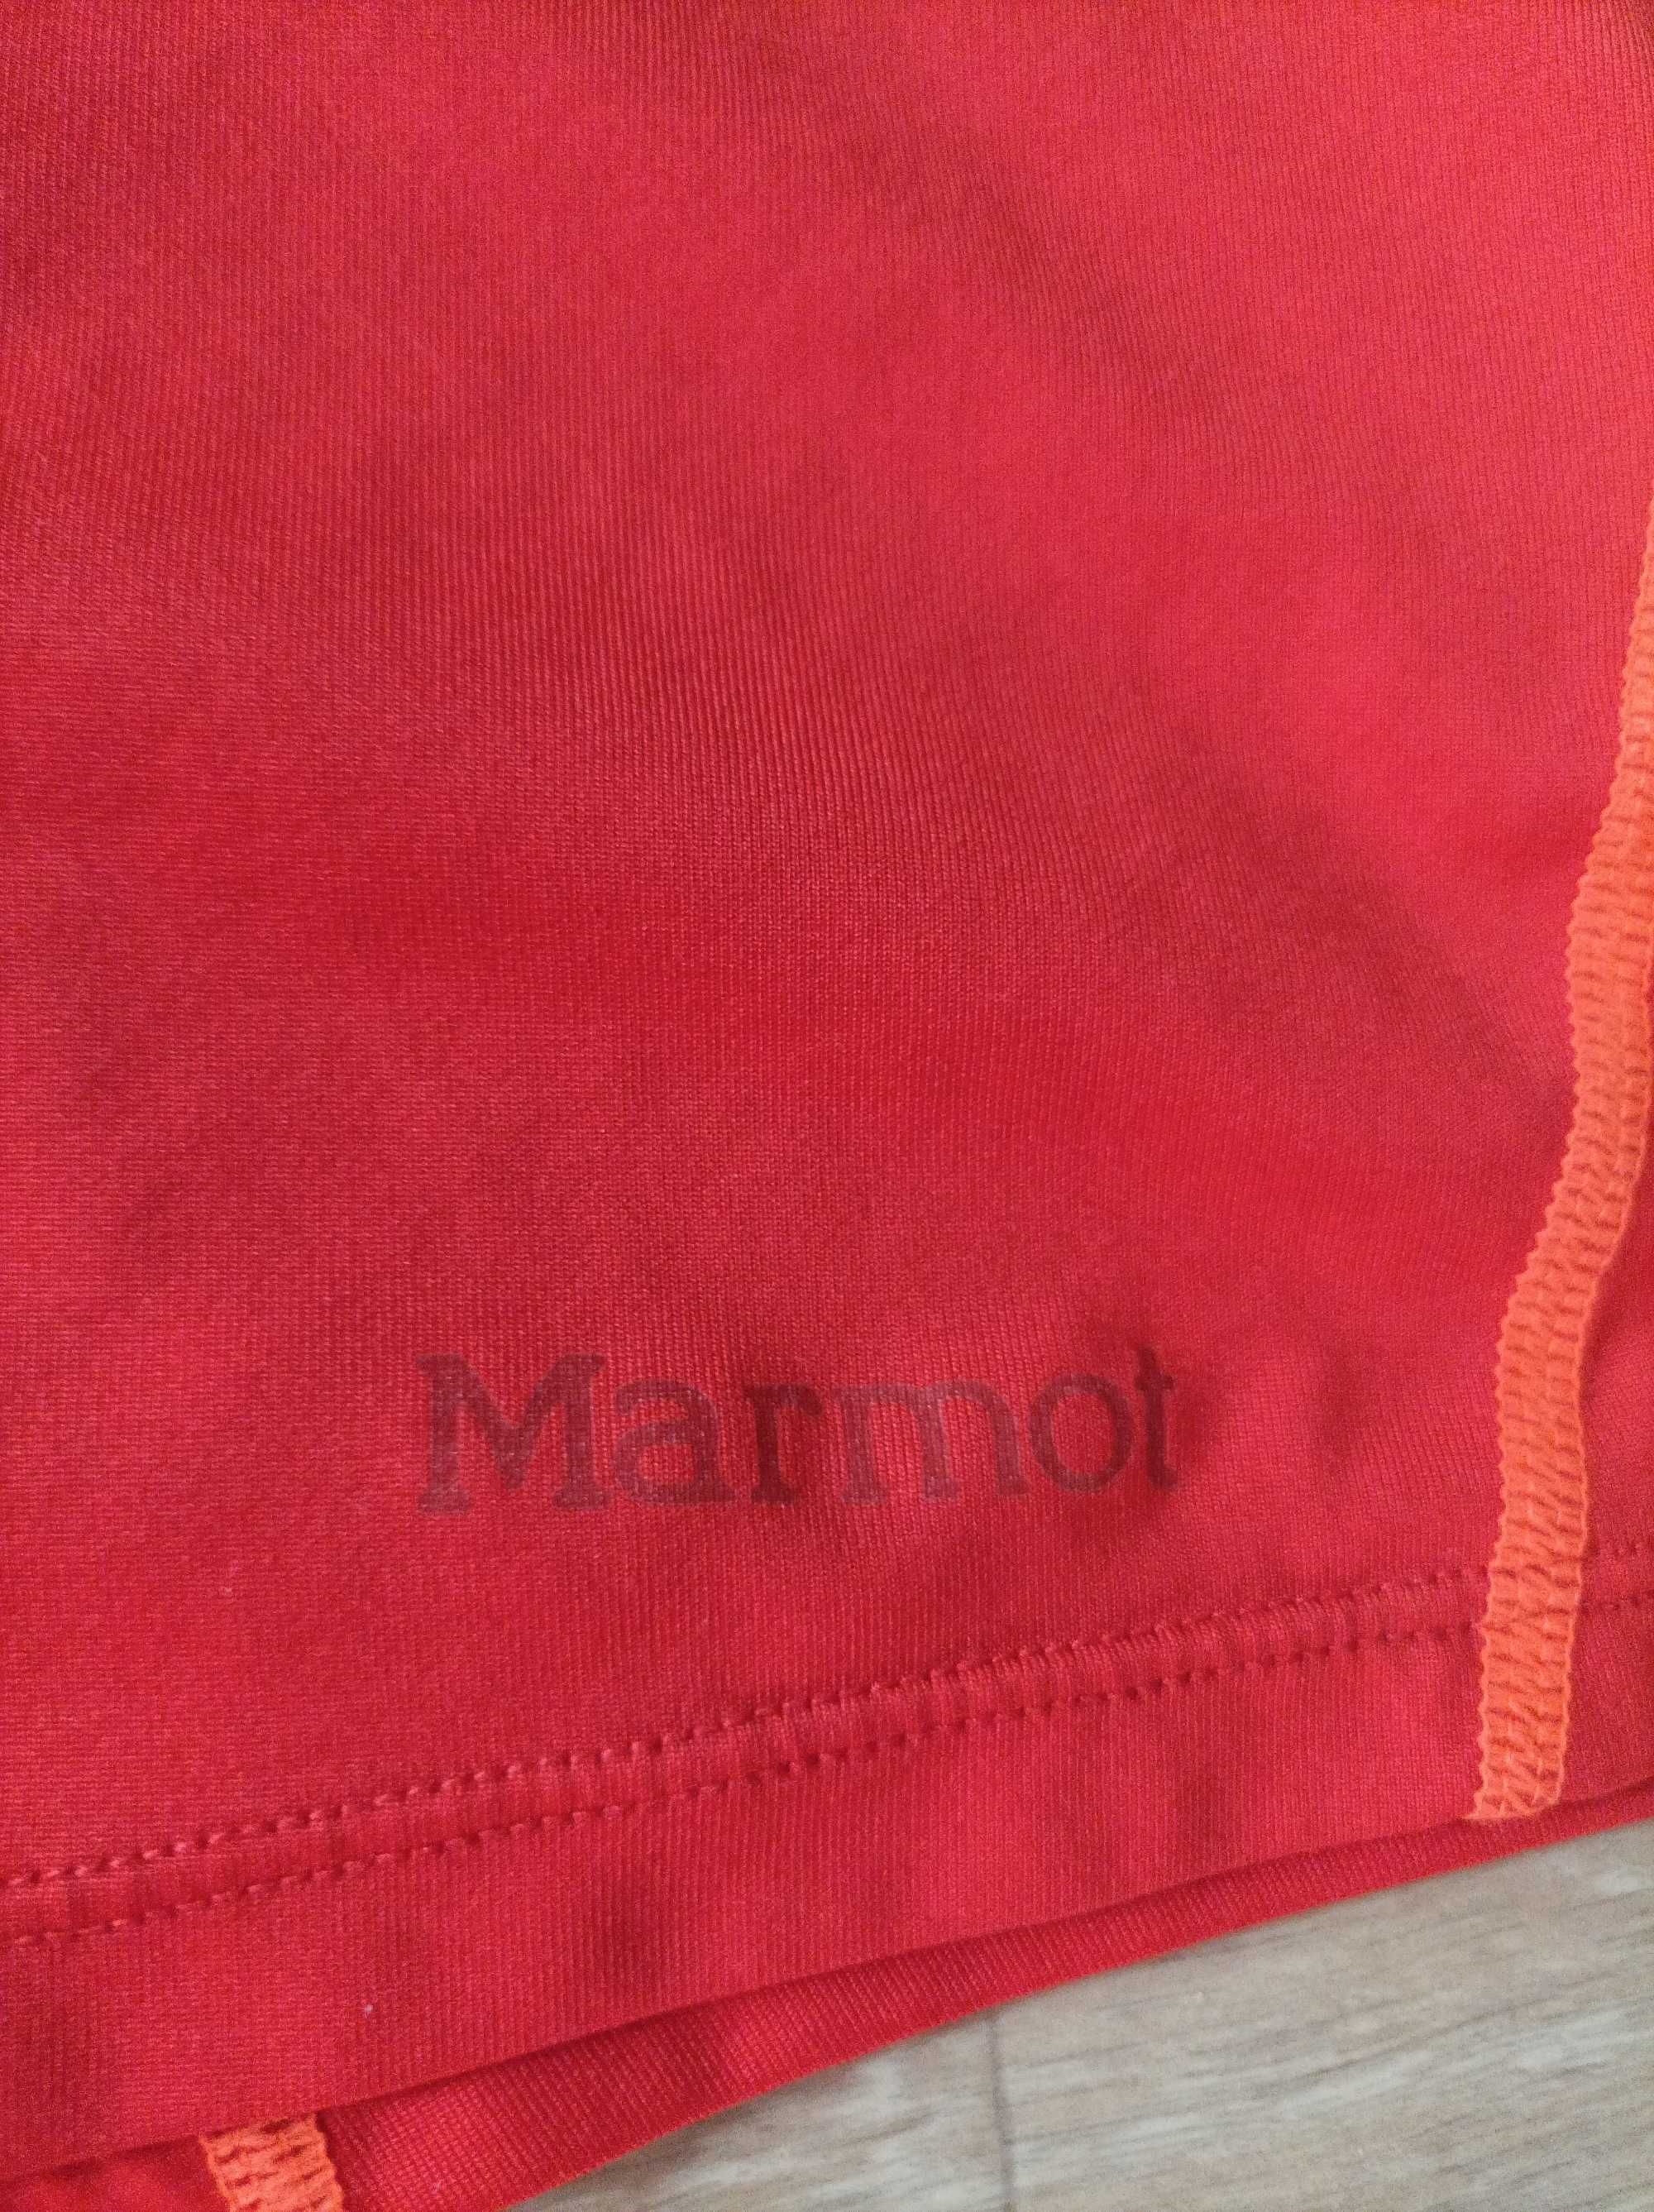 Футболка спортивная красного цвета  Marmot р XL